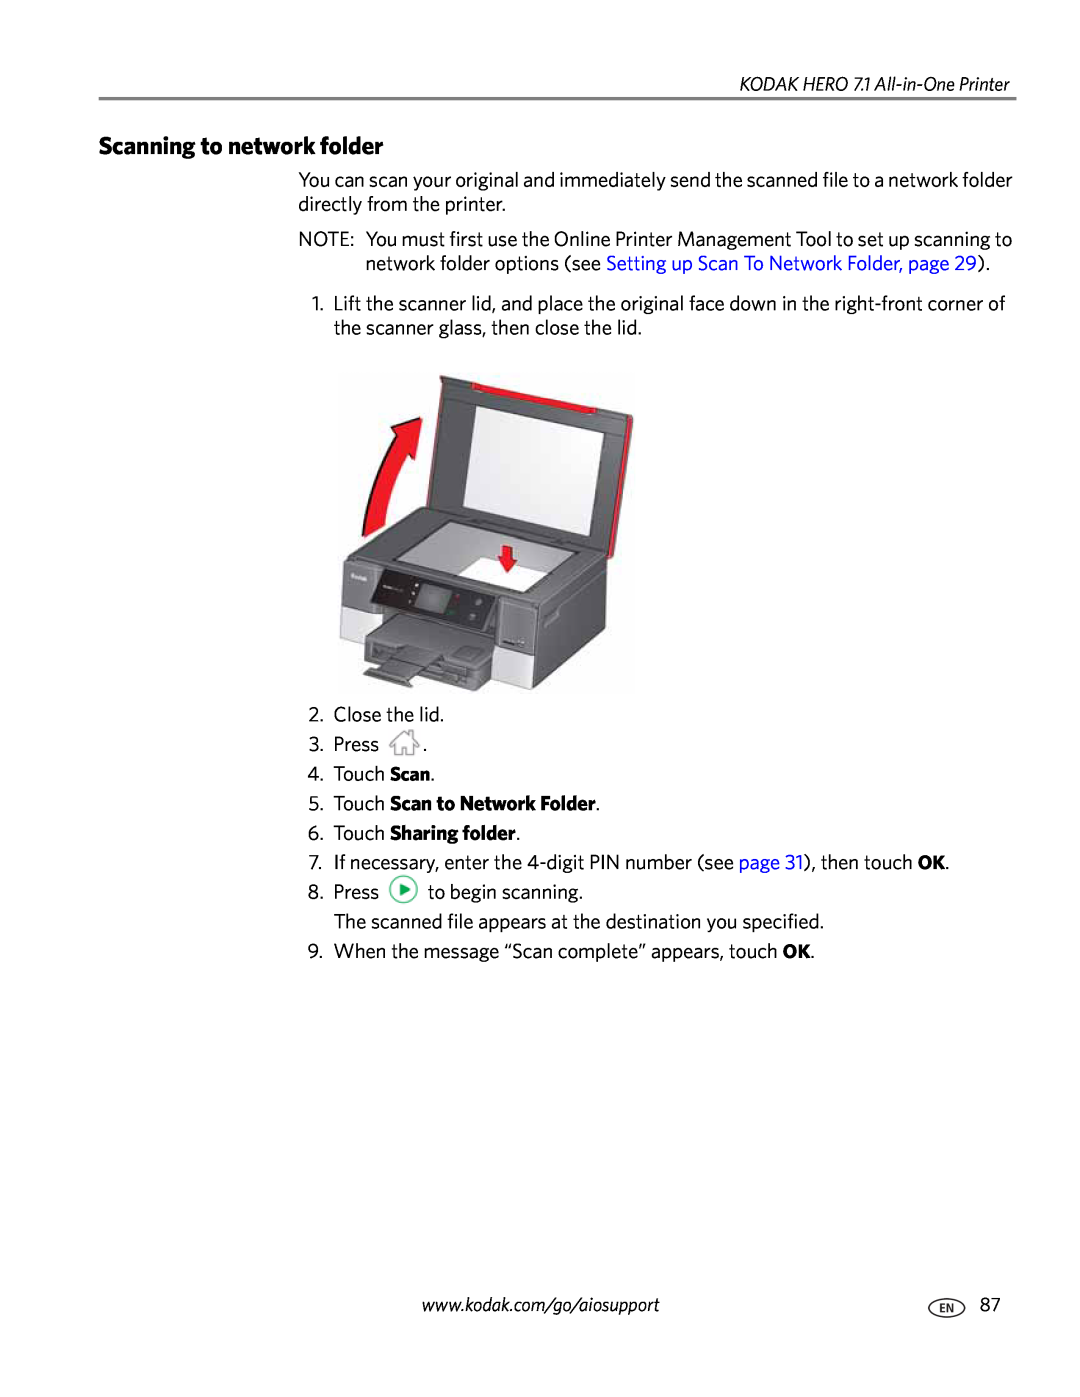 Kodak 7.1 manual Scanning to network folder, Touch Scan to Network Folder 6. Touch Sharing folder 